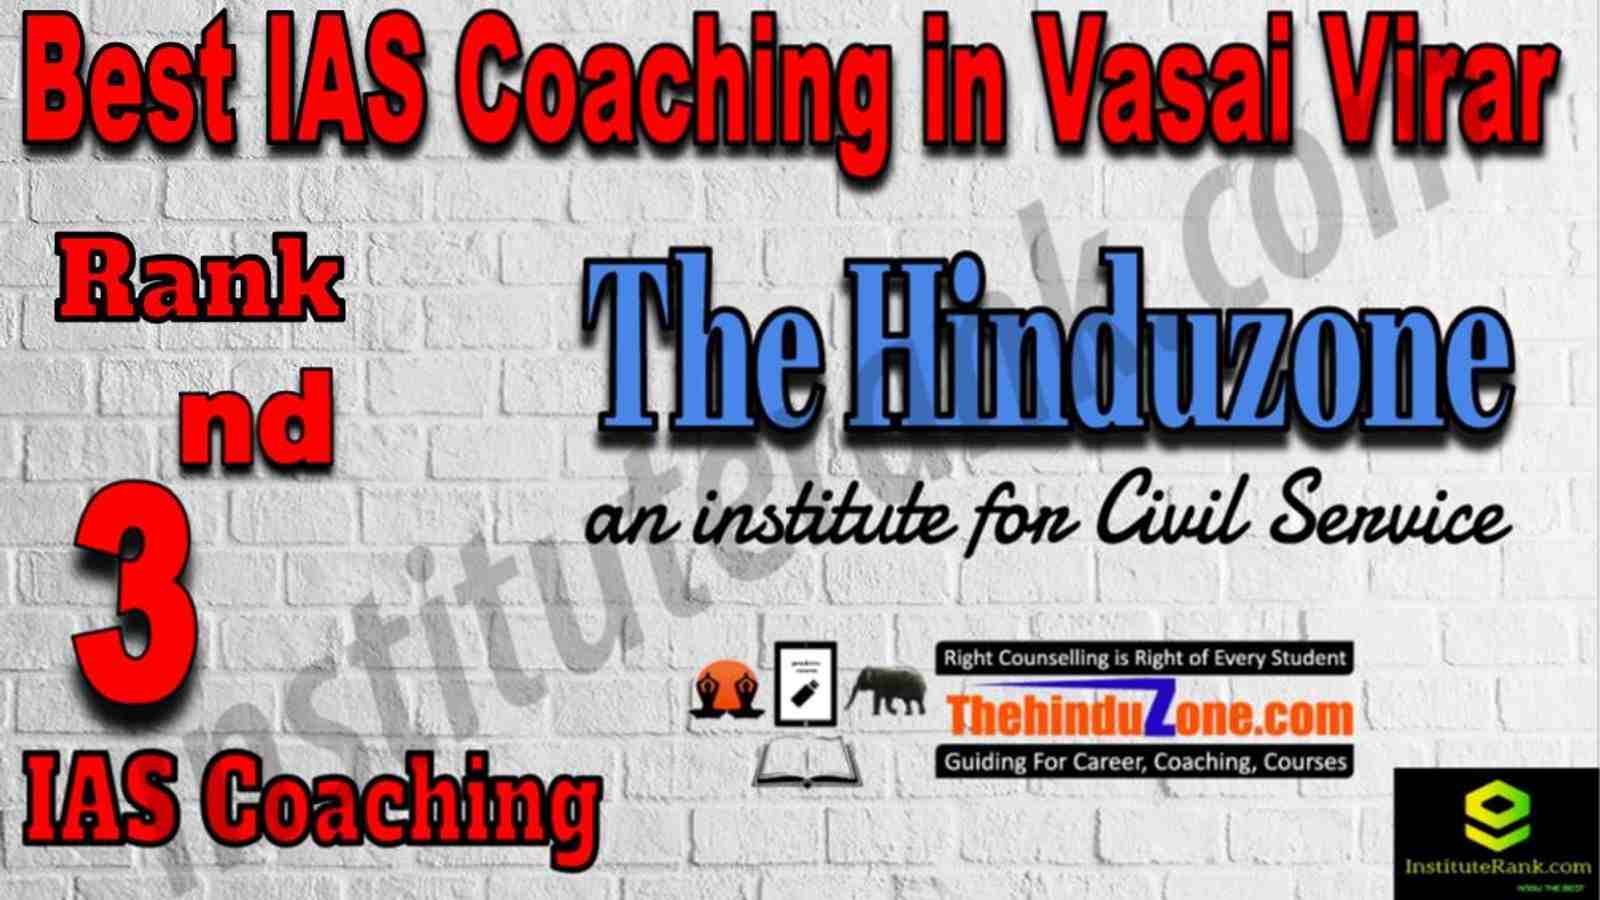 3rd Best IAS Coaching in Vasai Virar